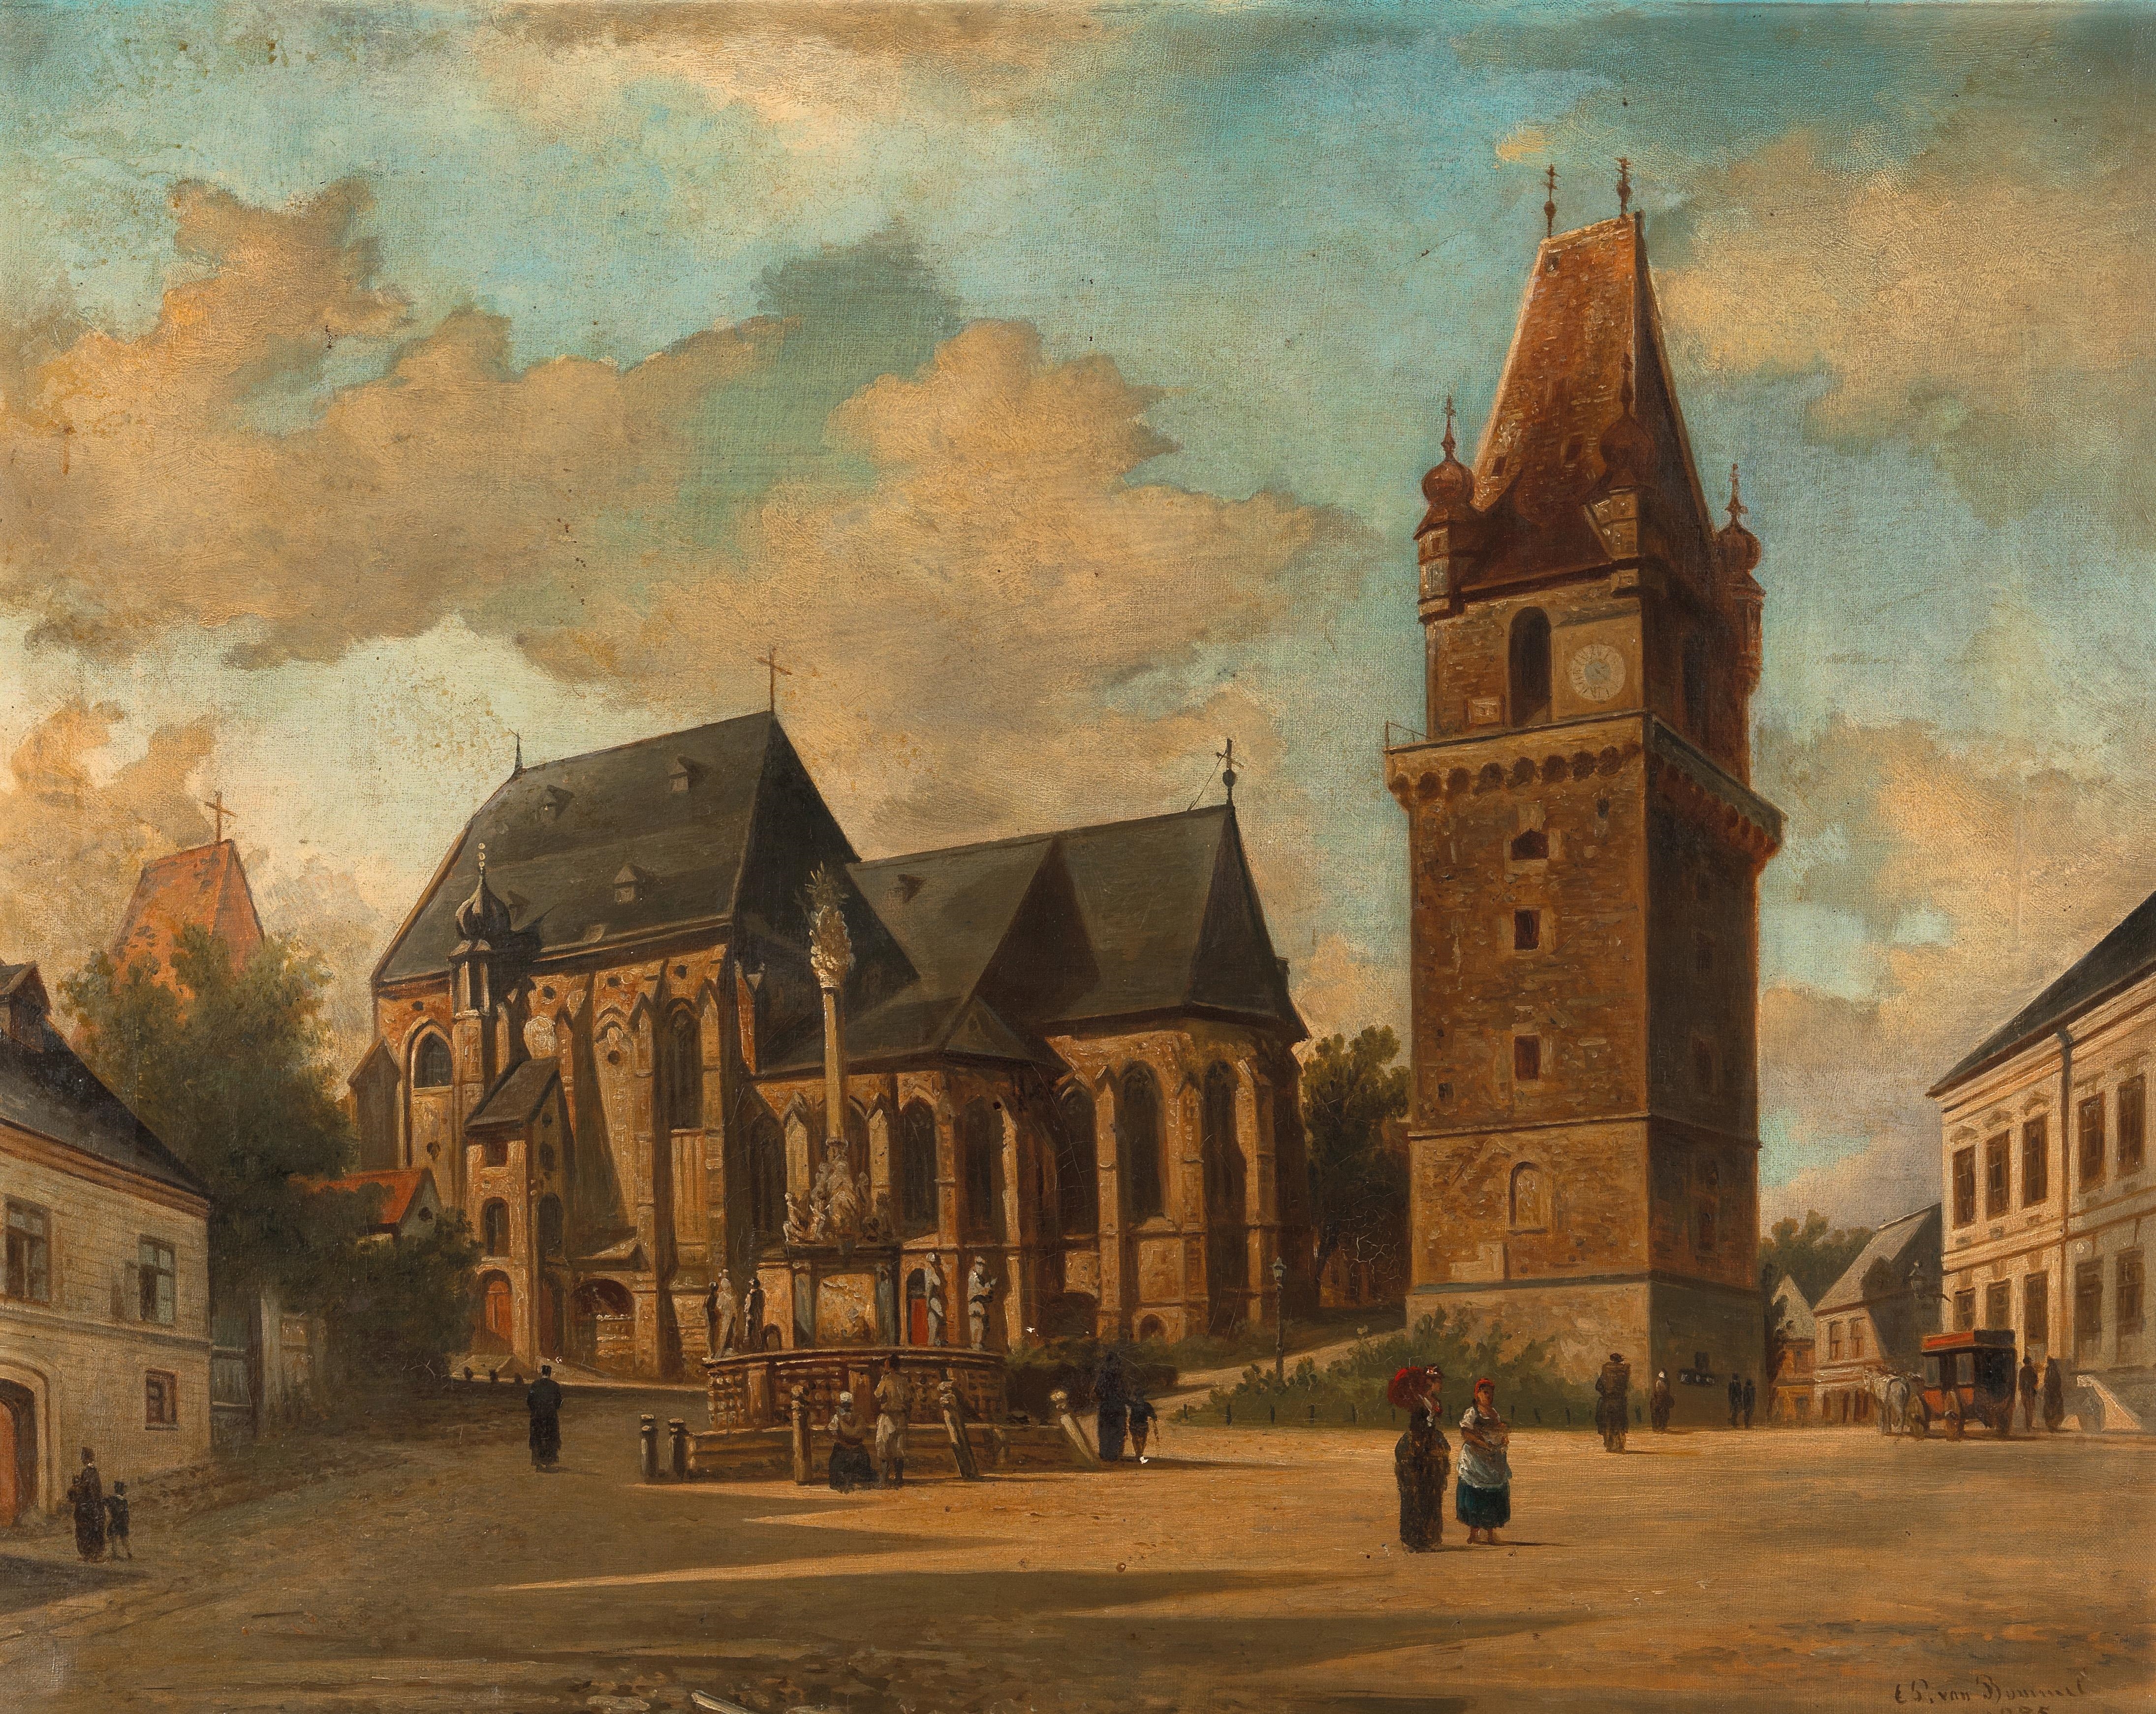 Artwork by Elias Pieter van Bommel, Die Augustinerkirche in Perchtoldsdorf bei Wien, Made of oil on canvas